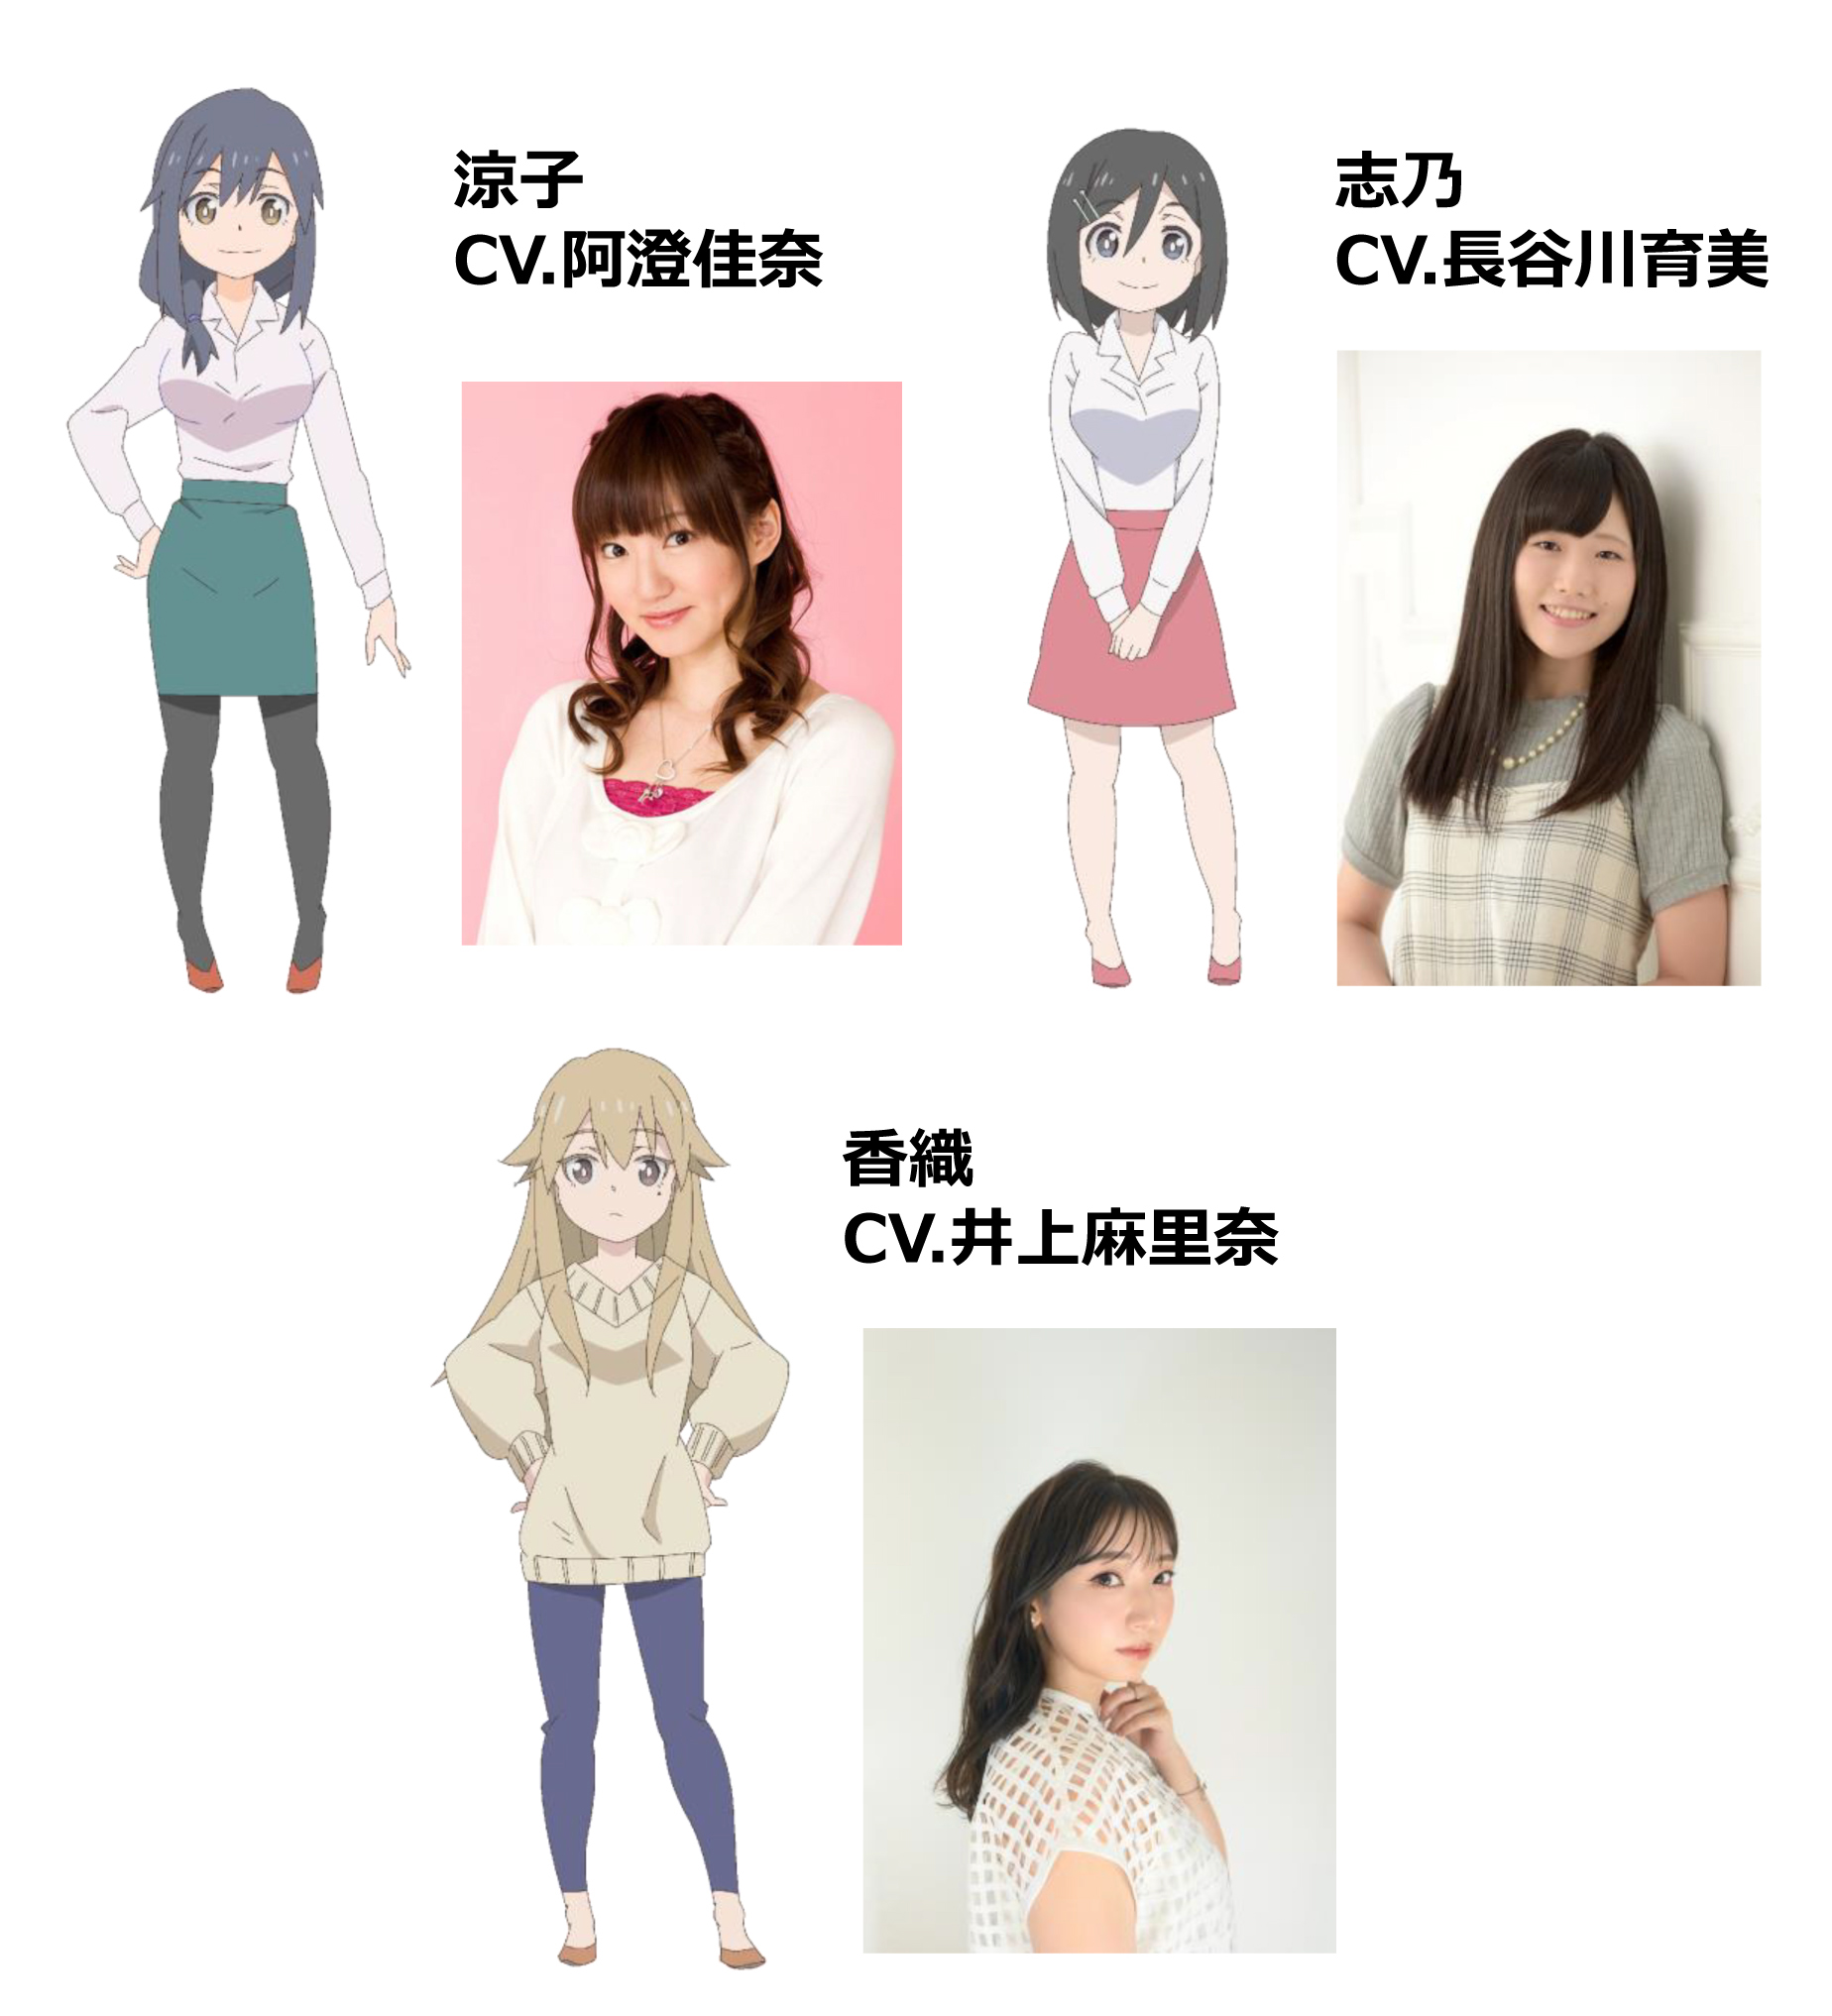 Character settings of Ryoko, Shino, and Kaori as well as their corresponding voice actors (Kana Asumi, Ikumi Hasegawa, and Marina Inoue) from the upcoming Shachiku-san wa Youjo Yurei ni Iyasaretai. TV anime.